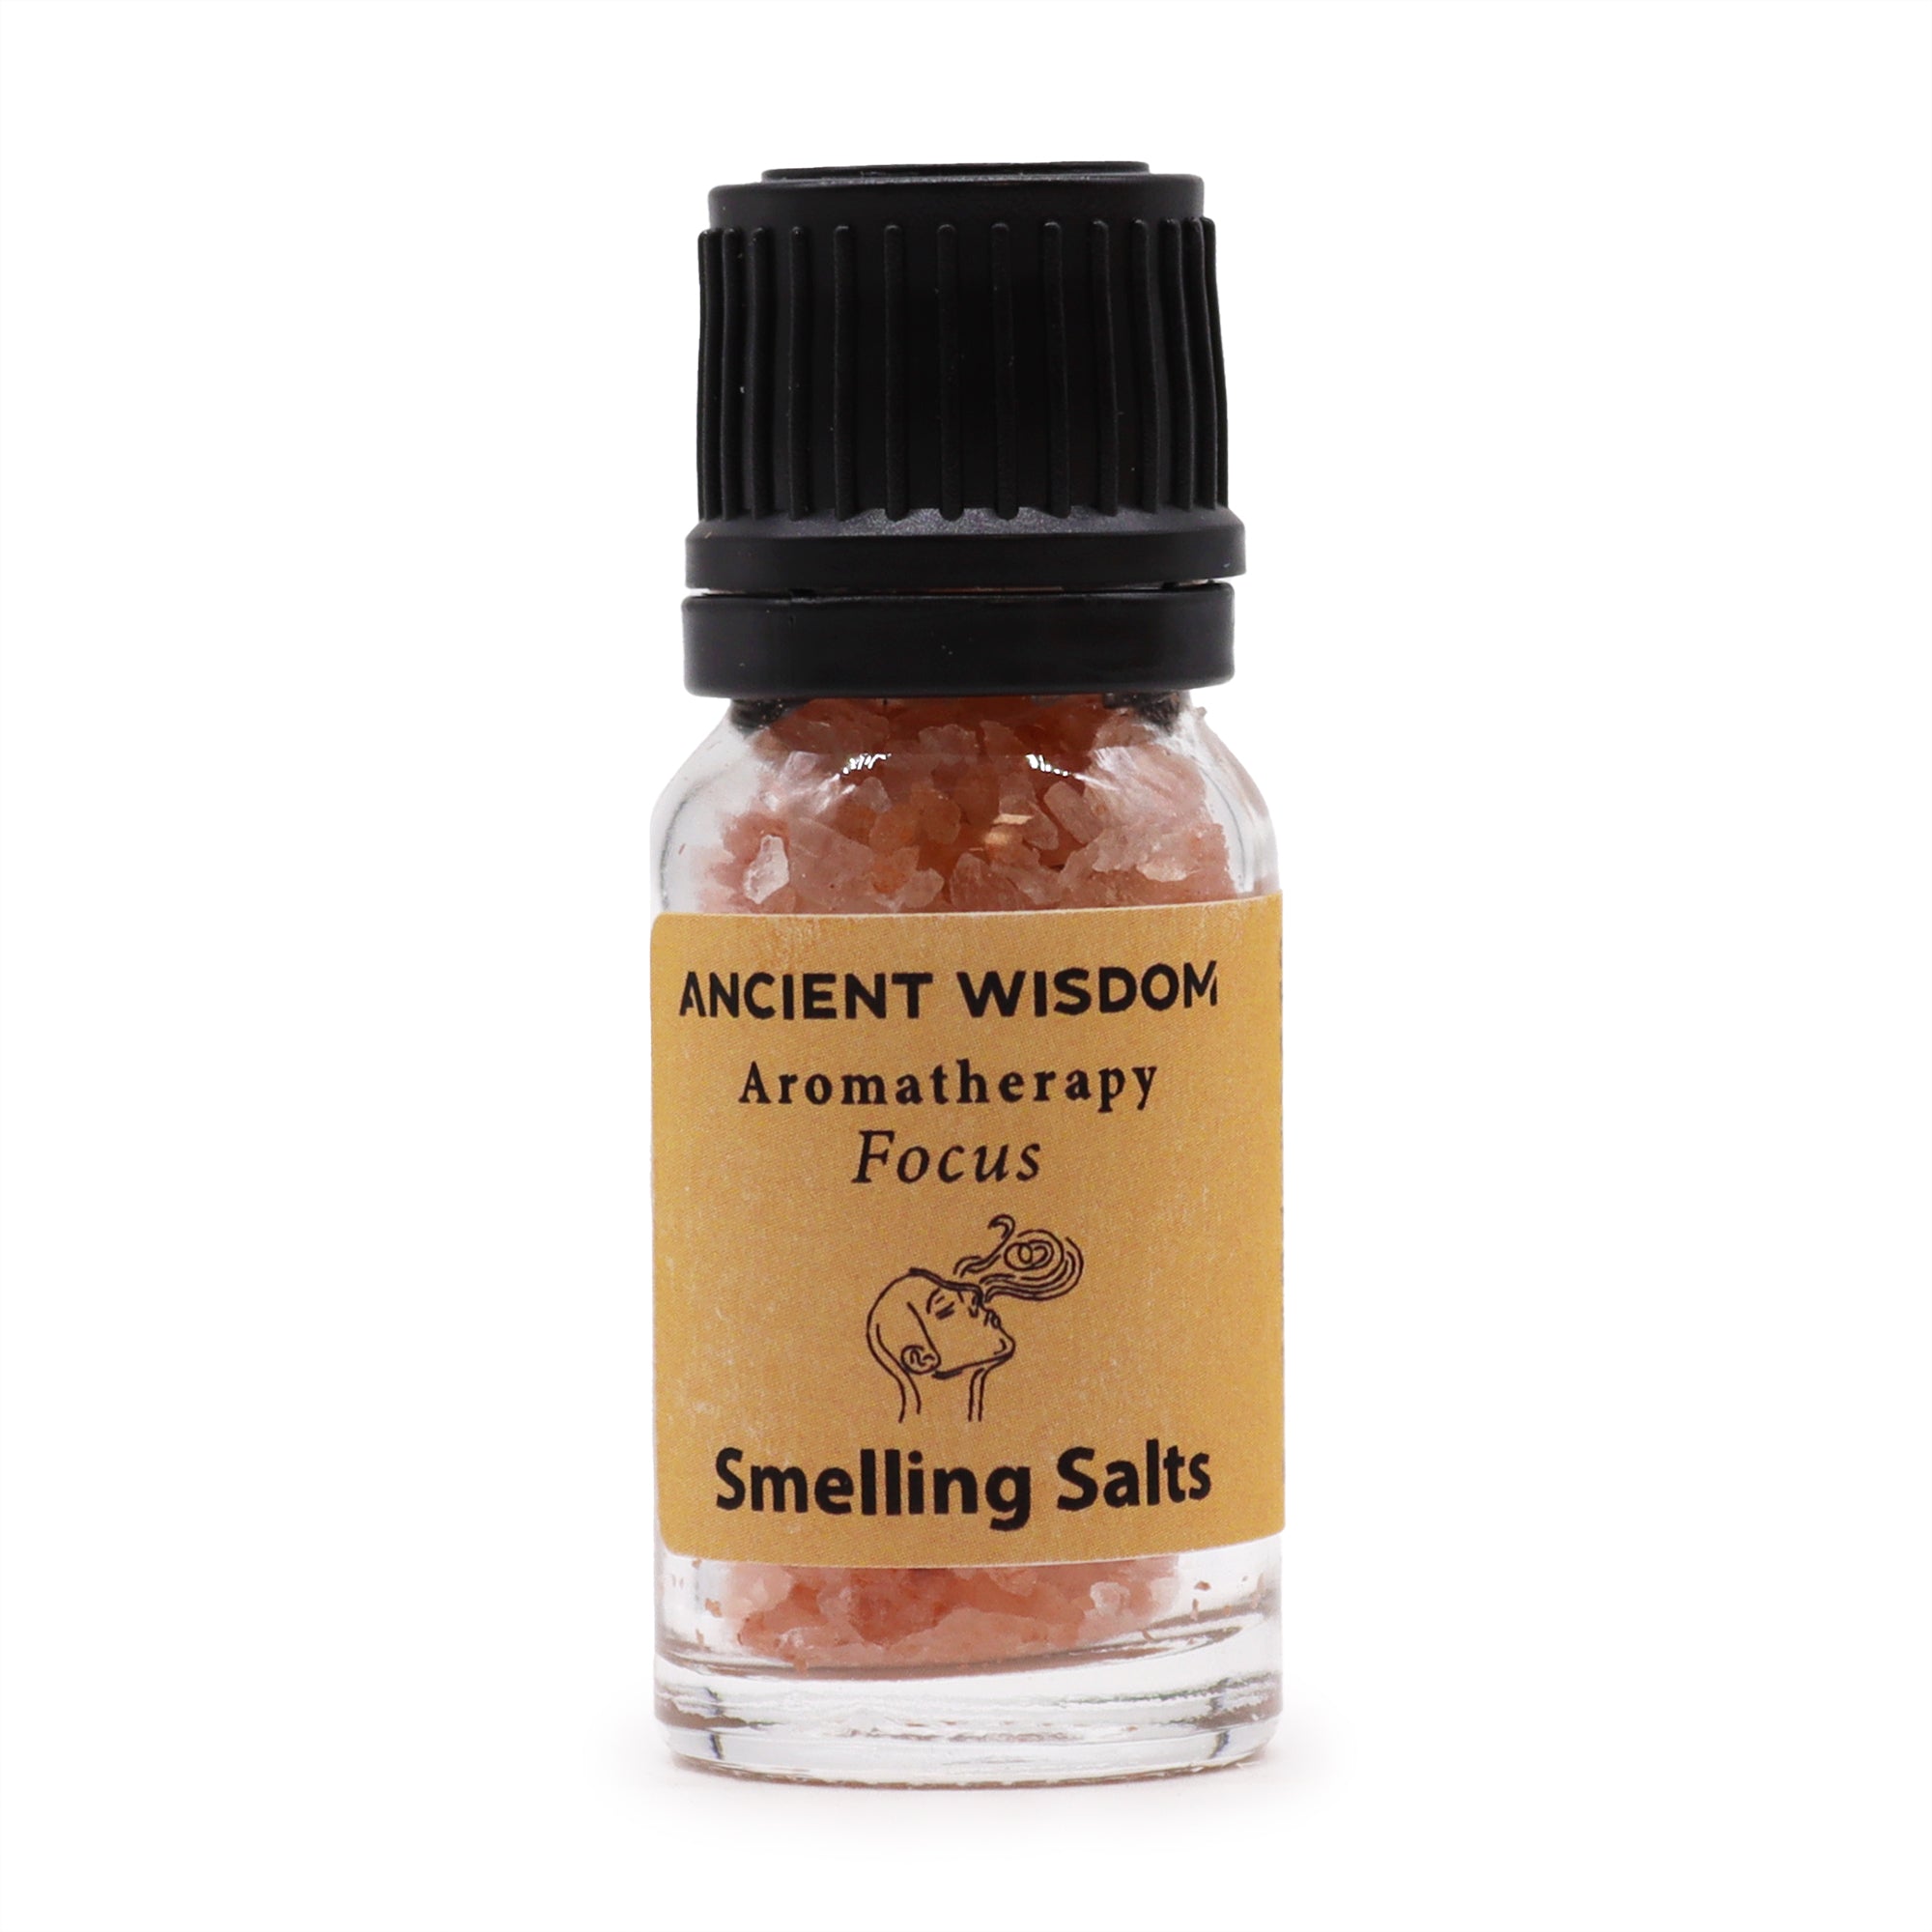 View Focus Aromatherapy Smelling Salt information